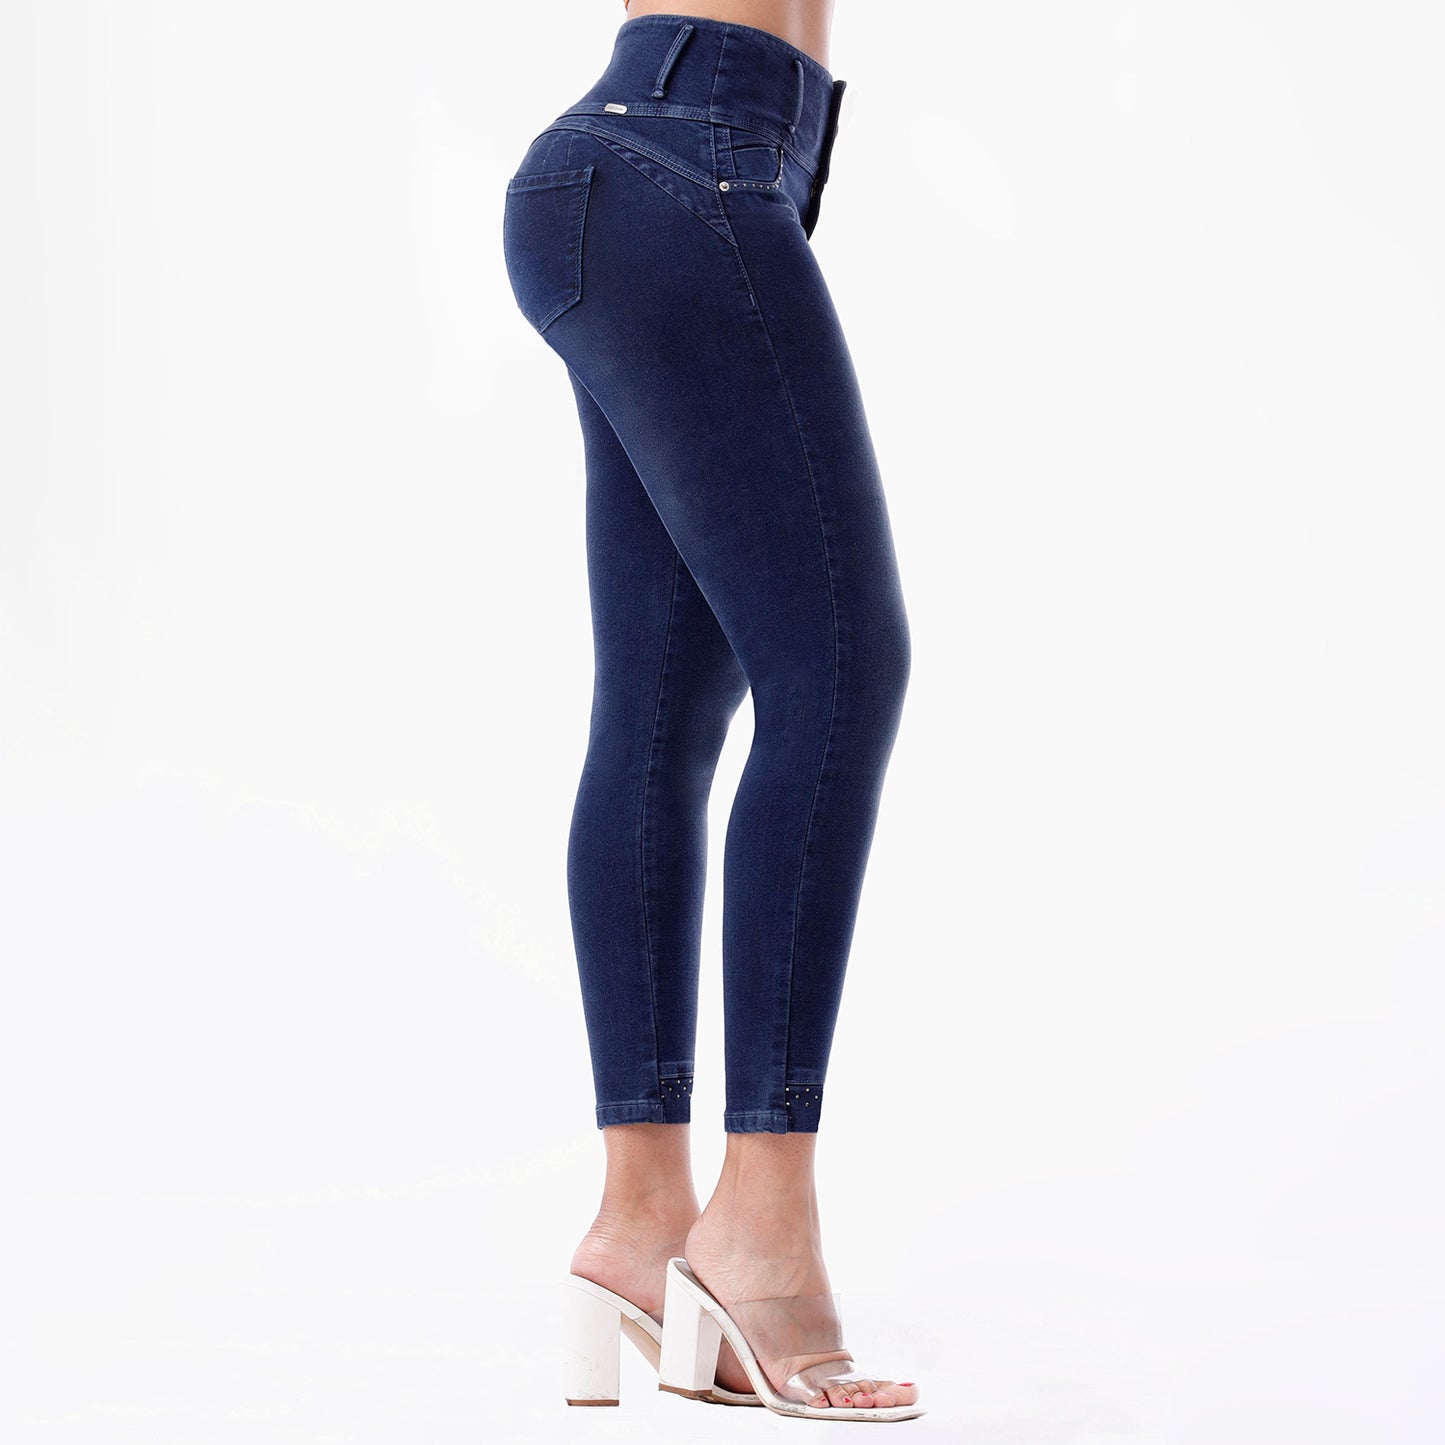 Jeans Push Up Mujer Semimoda Pitillo Tobillero Cintura Gráfito – 230191